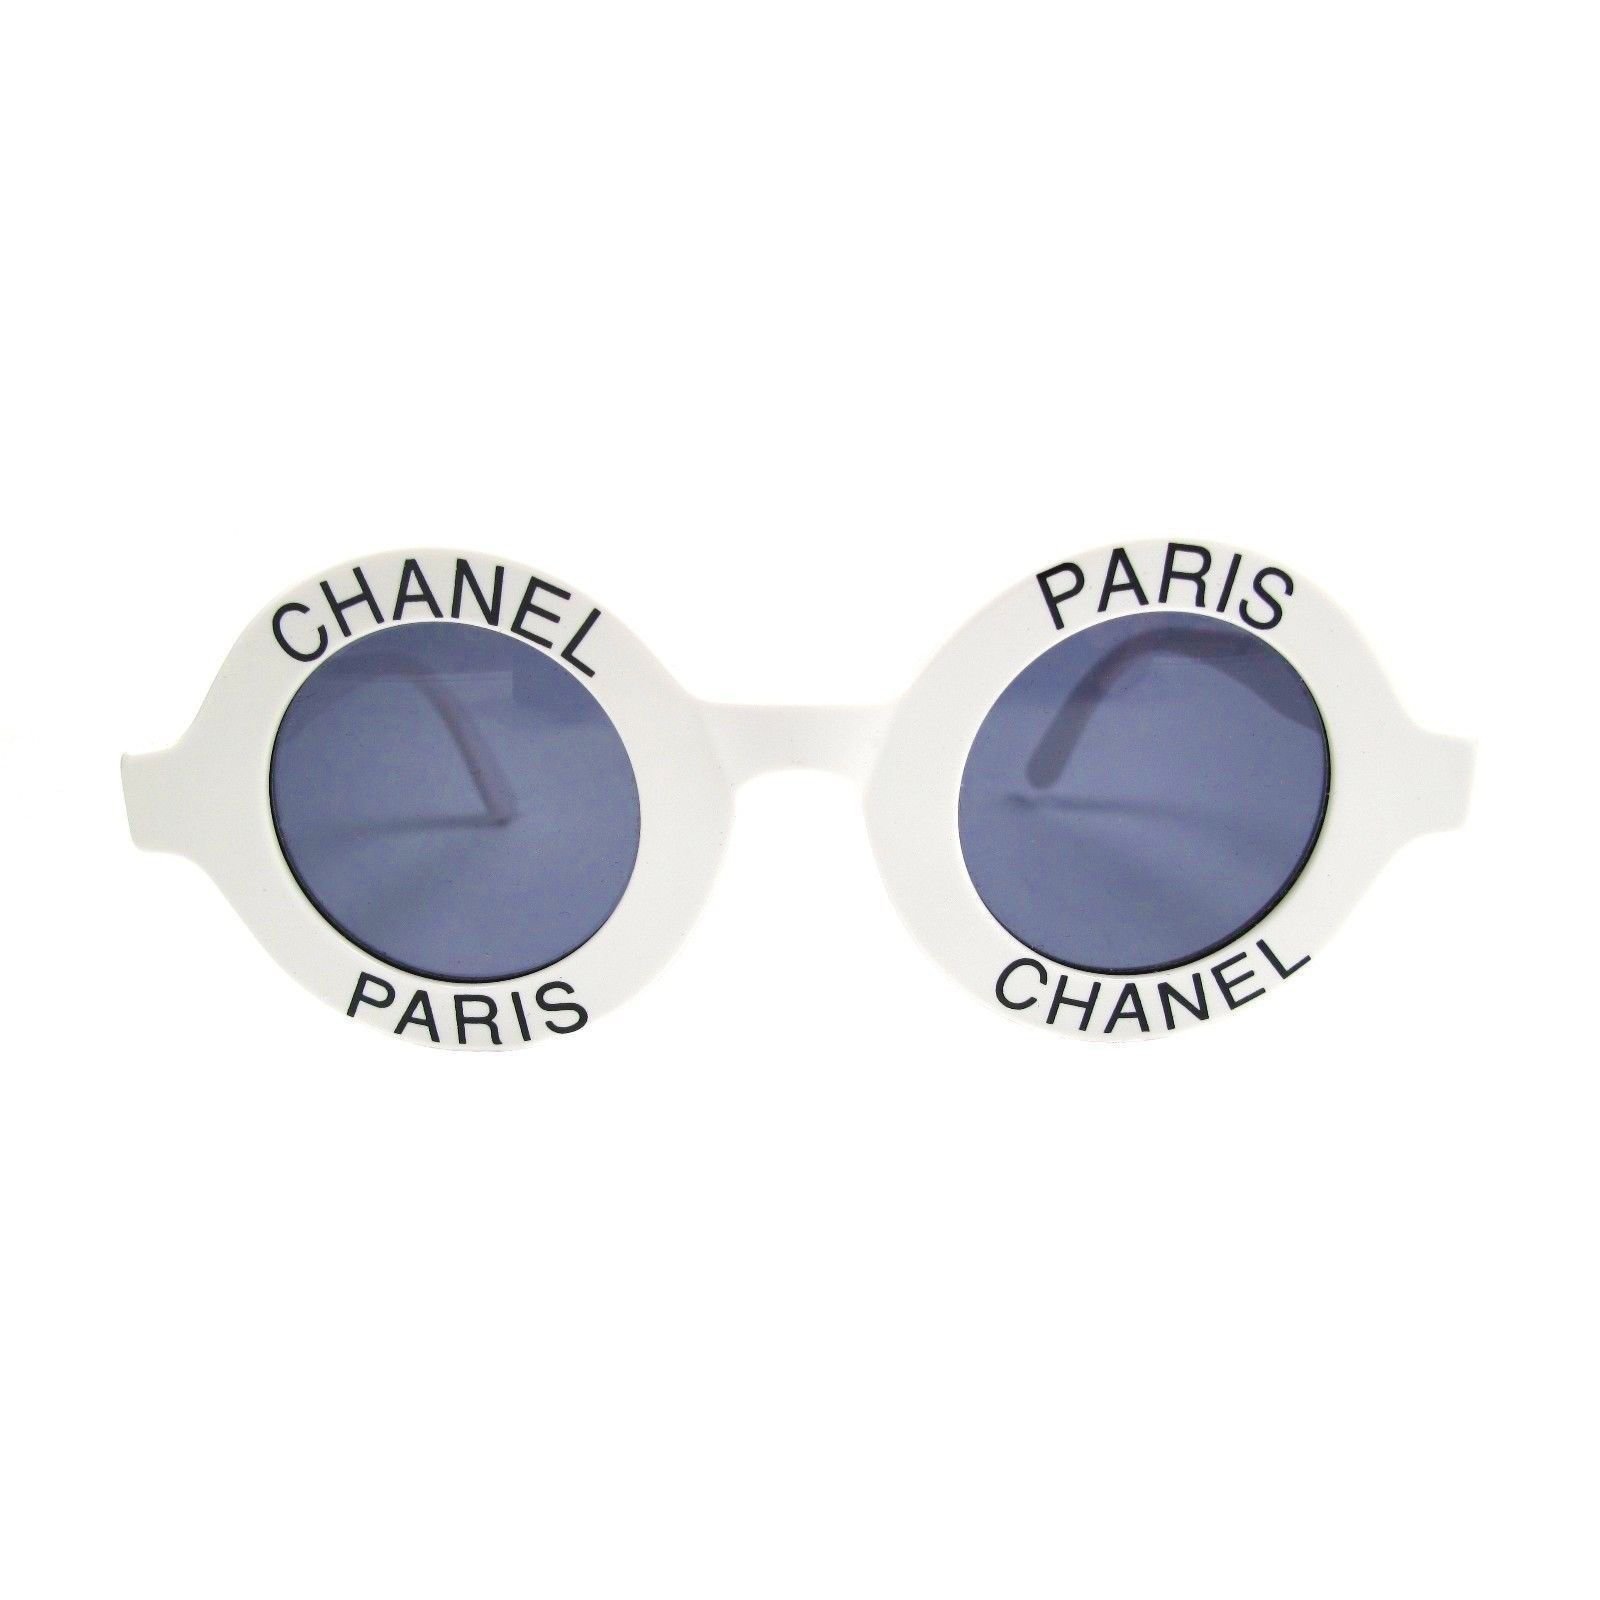 chanel sunglasses men used